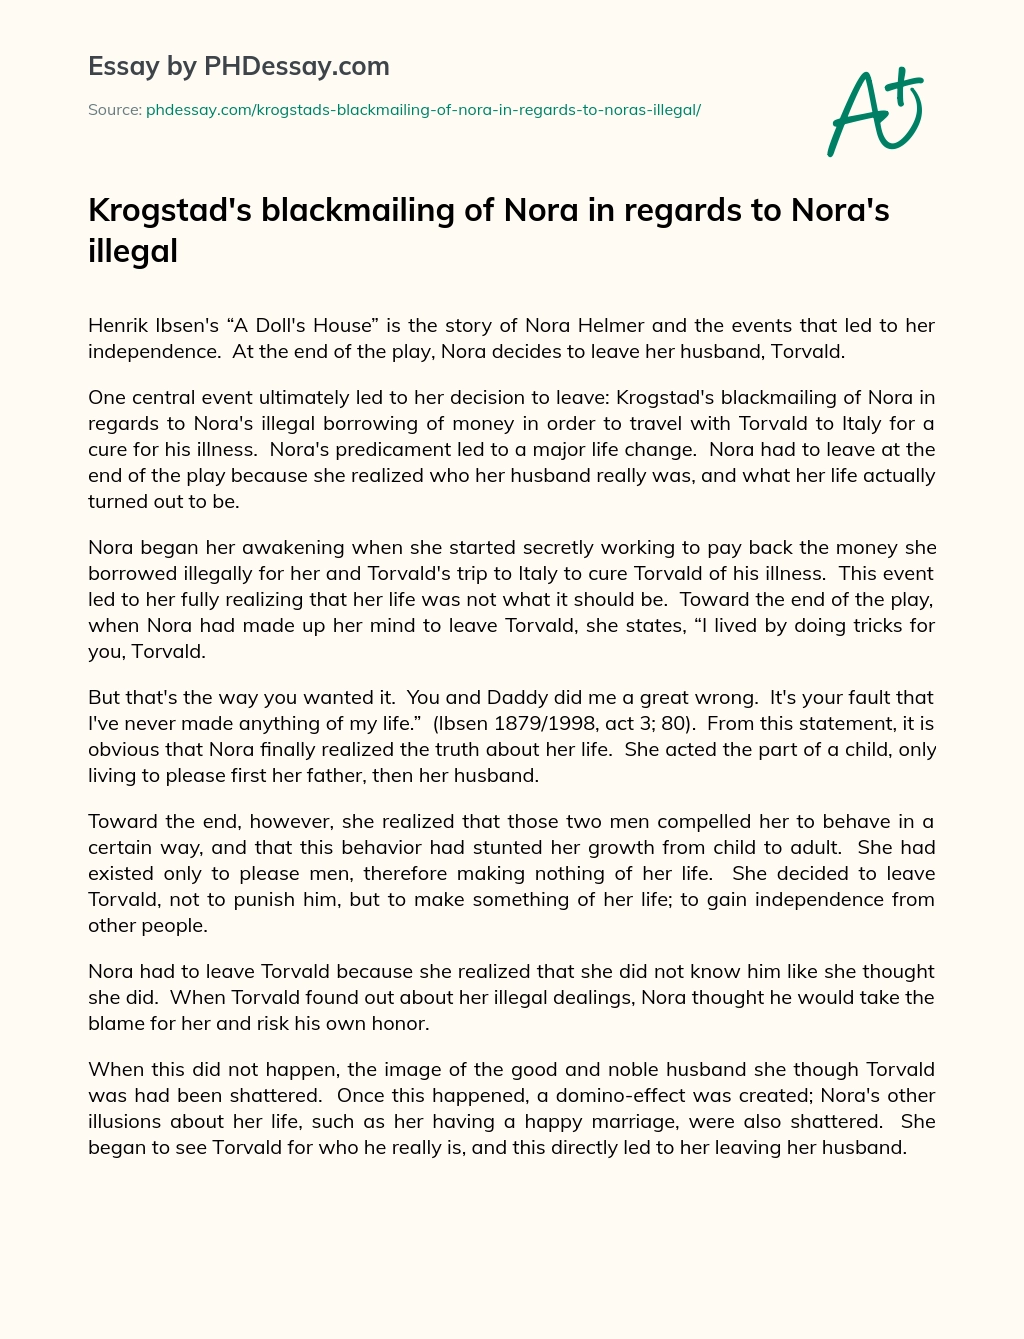 Krogstad’s blackmailing of Nora in regards to Nora’s illegal essay